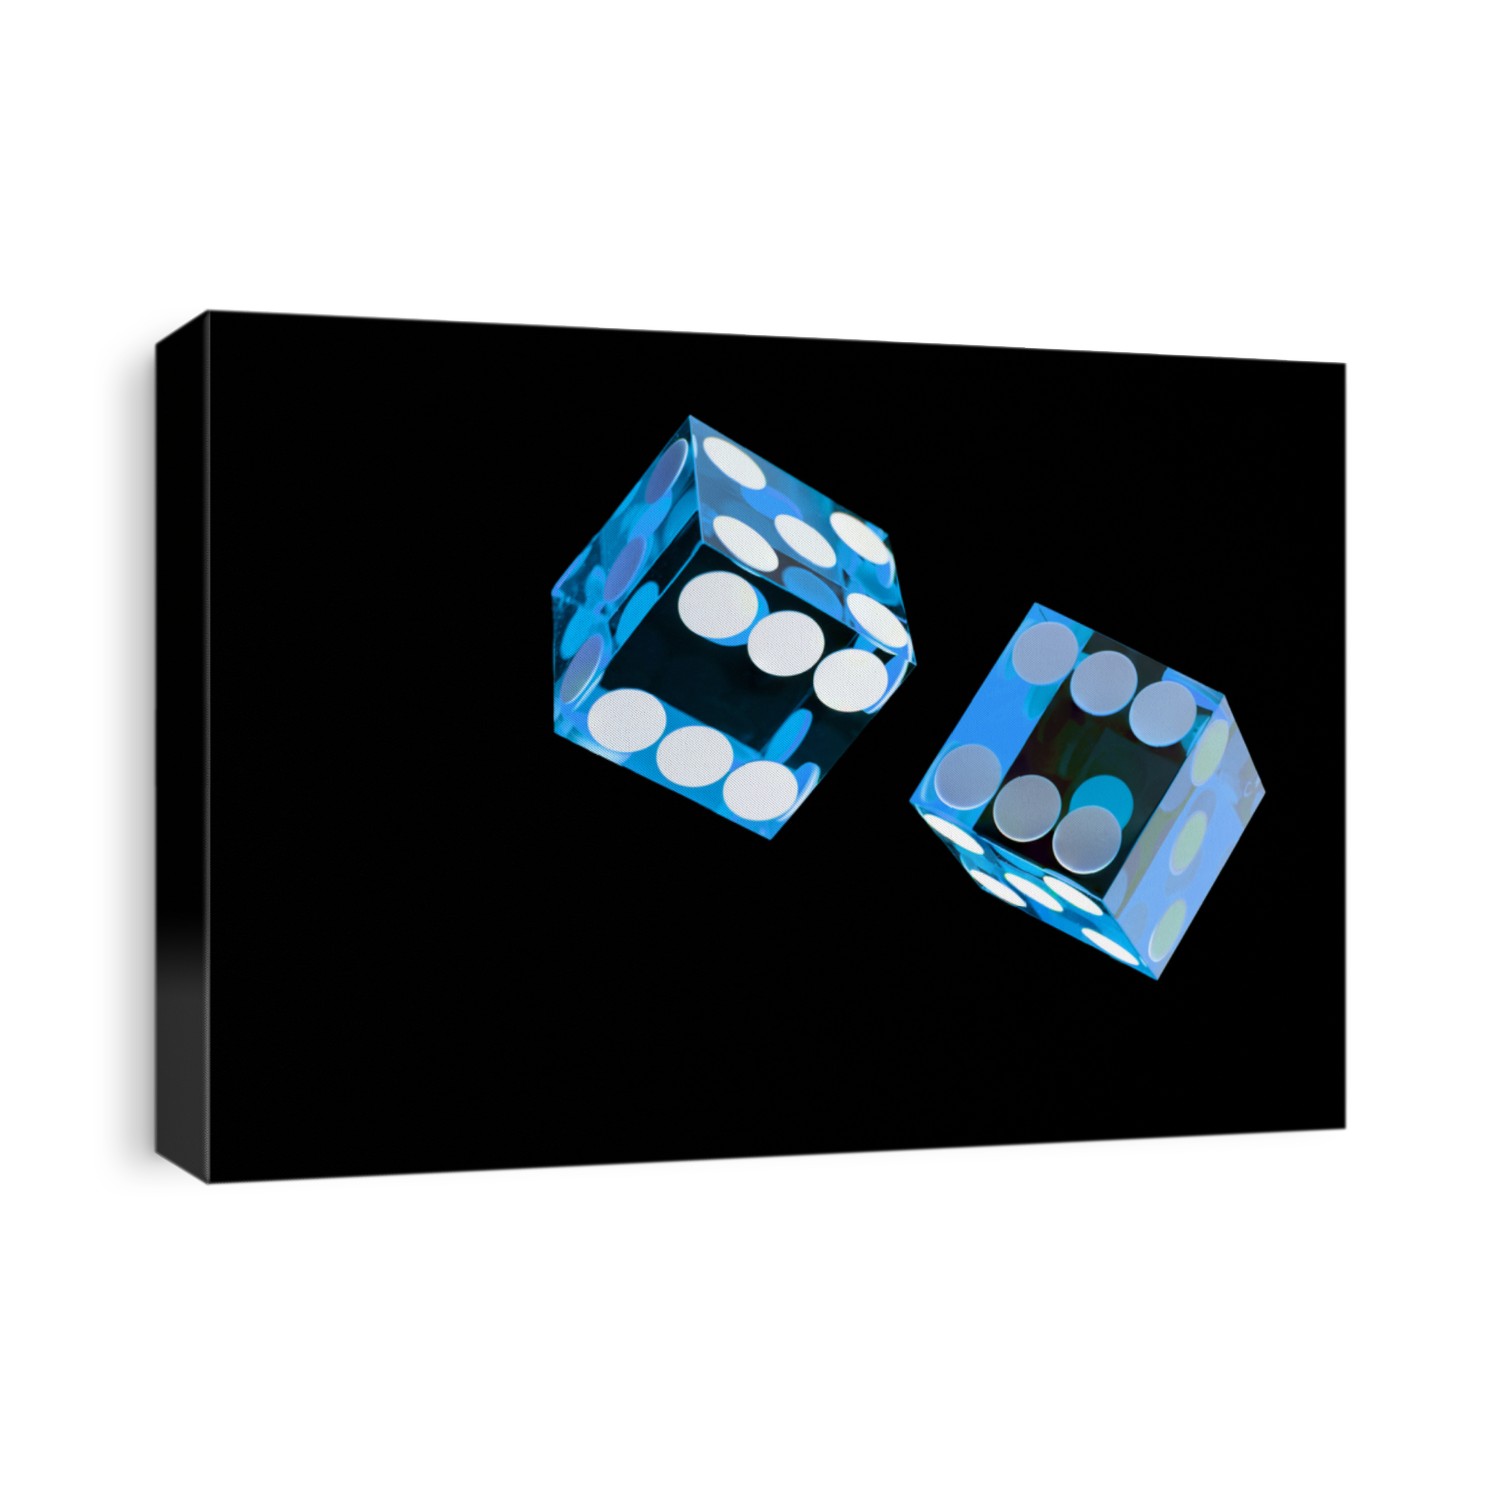 Two casino precision craps blue dice  on black background